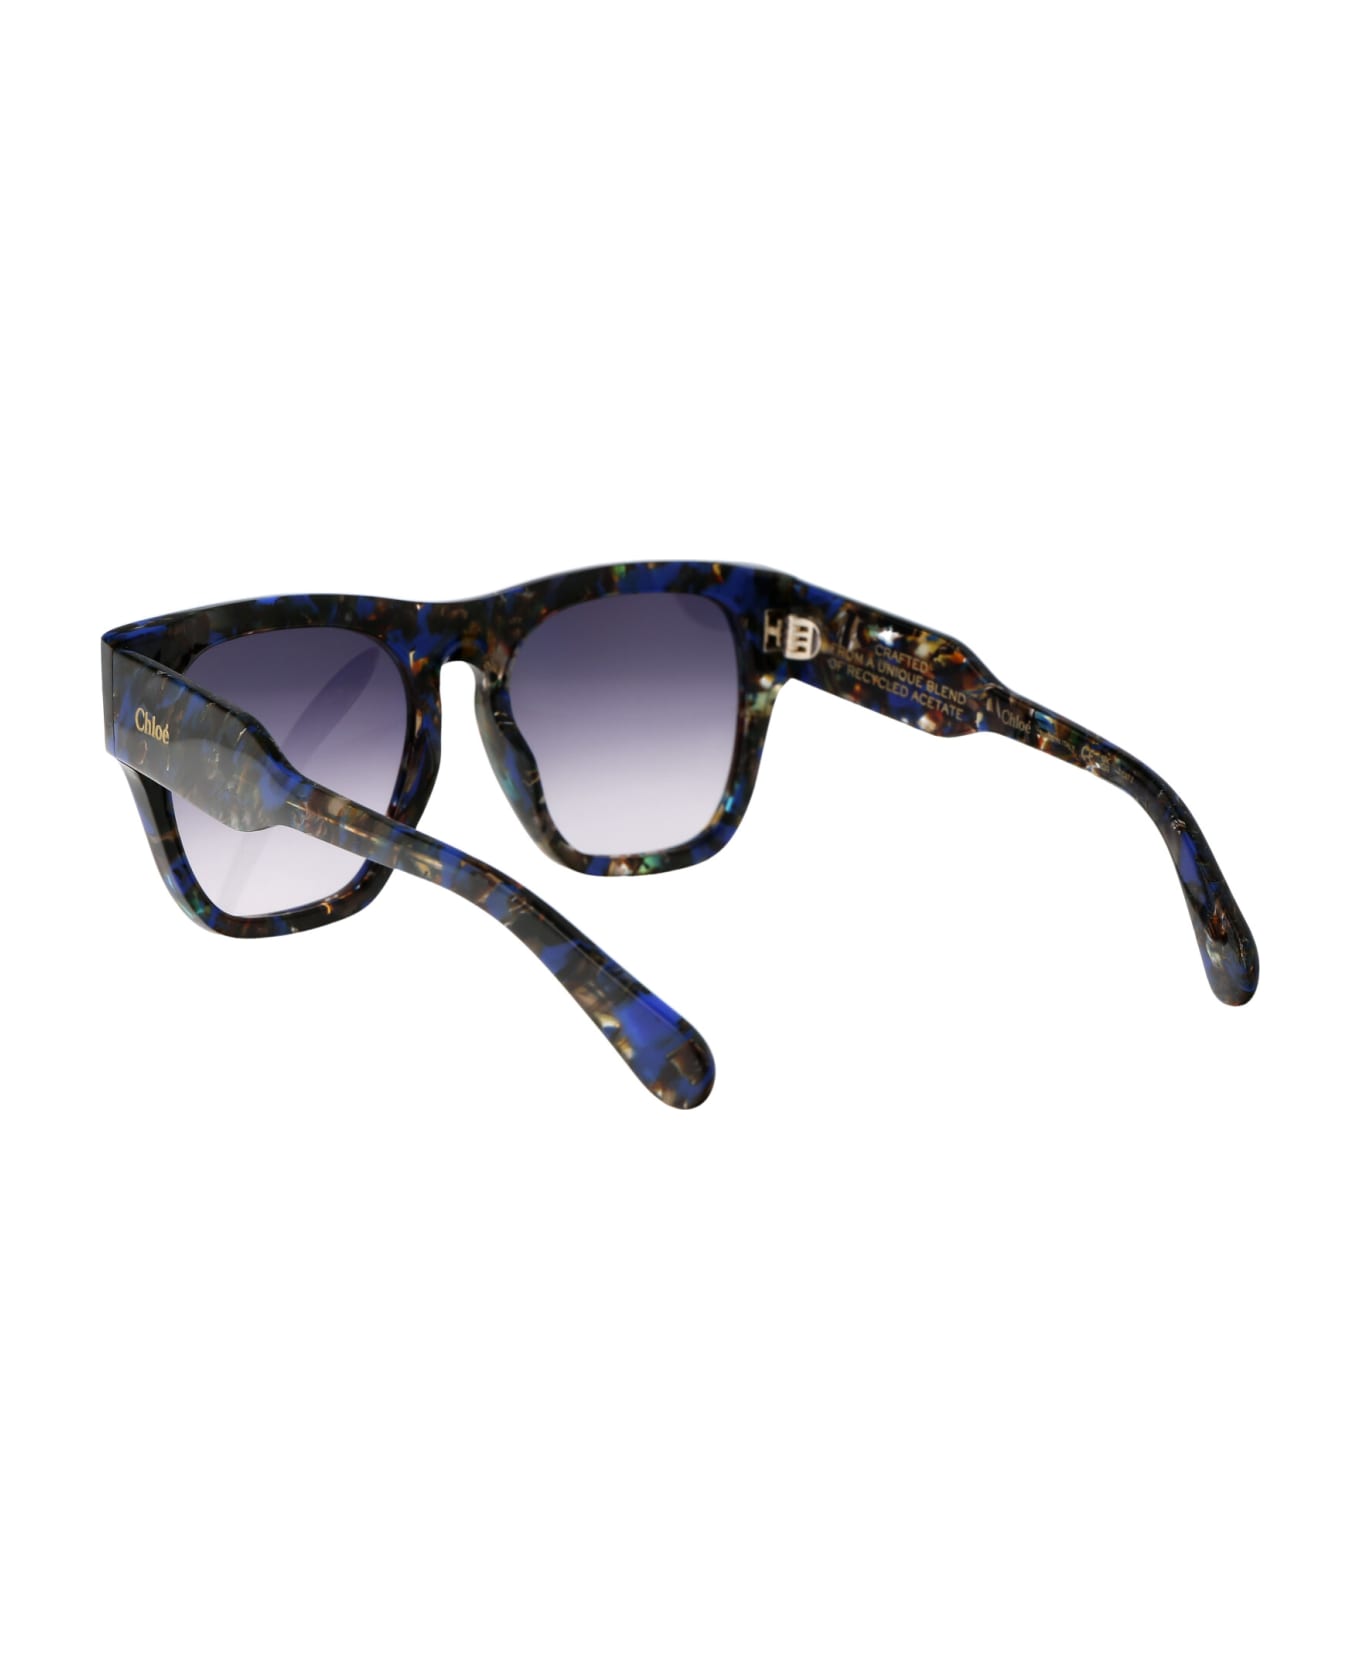 Chloé Eyewear Ch0149s Sunglasses - 008 BLUE BLUE BLUE